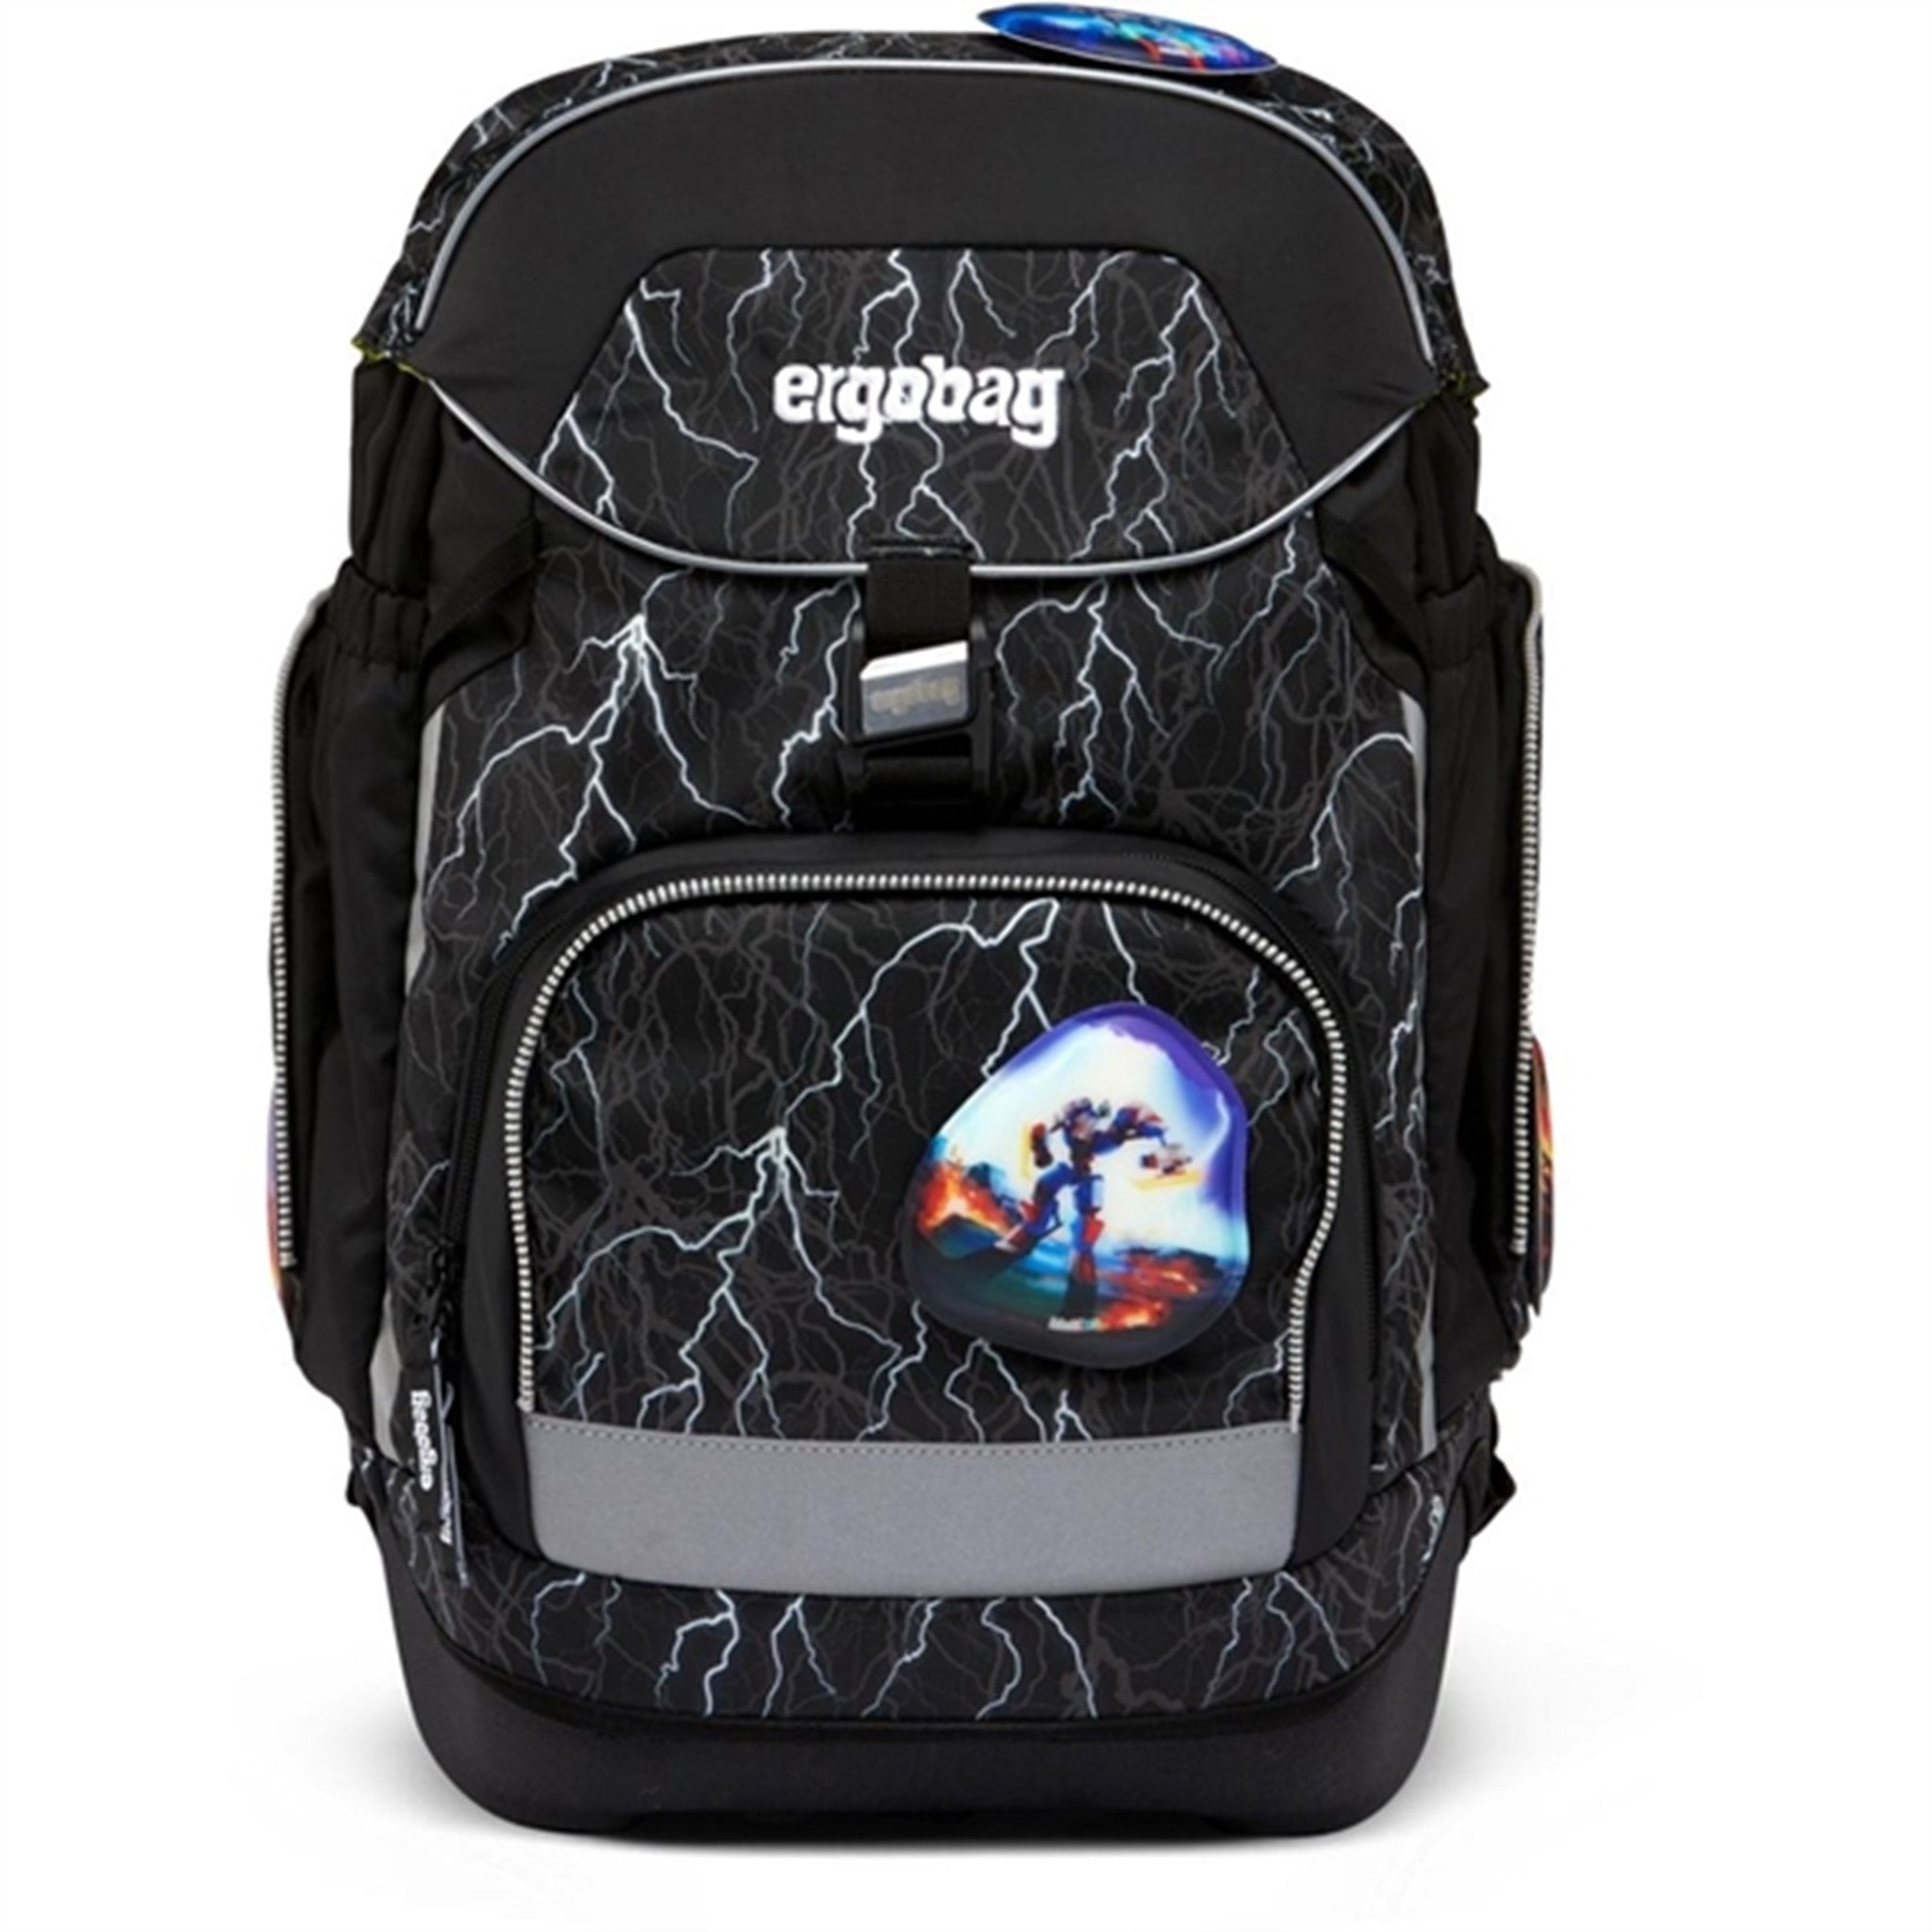 Ergobag School Bag Set Pack Super ReflectBear 2